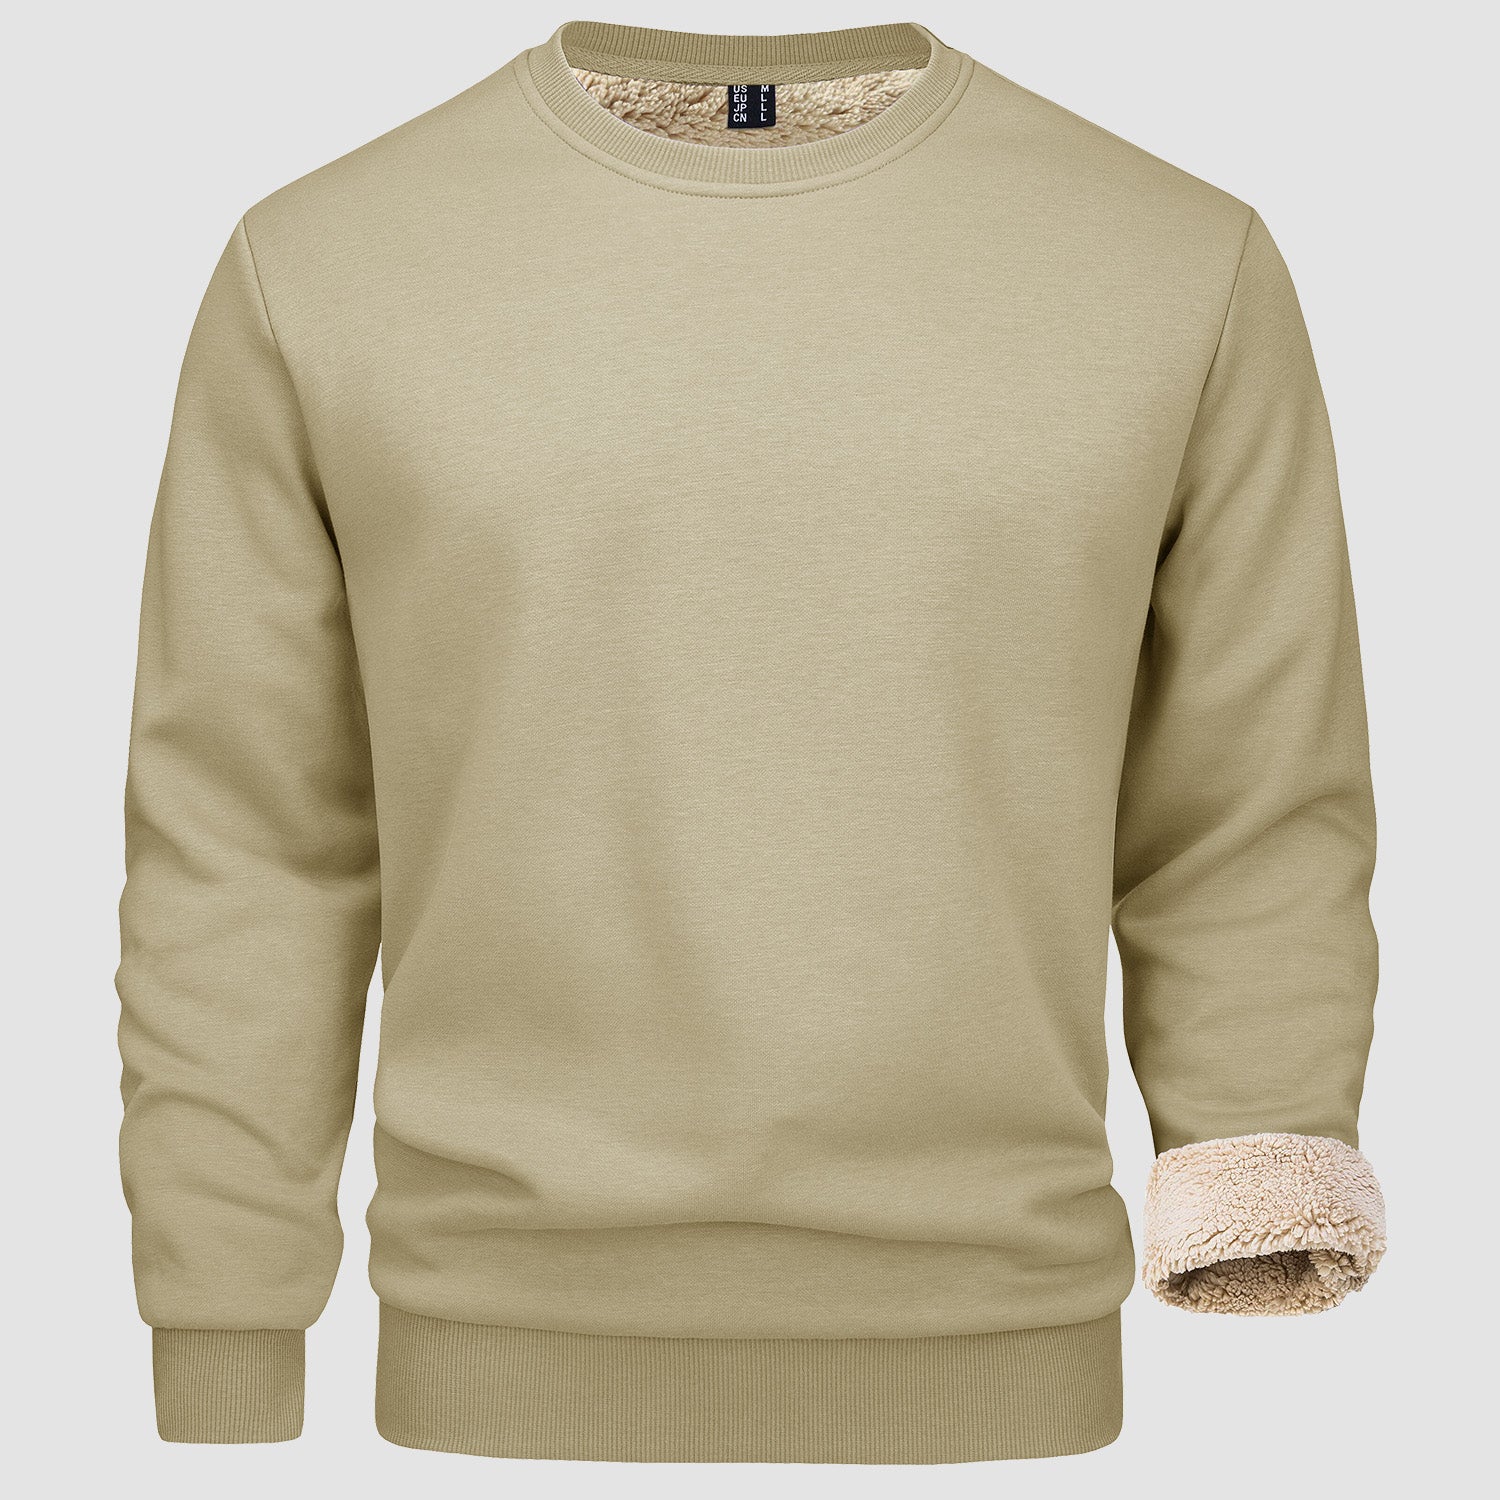 Men's Fleece Lined Sweatshirts Pullover Basic Tops Warm Crewneck Winter Sweater UnderwearMen's Fleece Lined Sweatshirts Pullover Basic Tops Warm Crewneck Winter Sweater Underwear